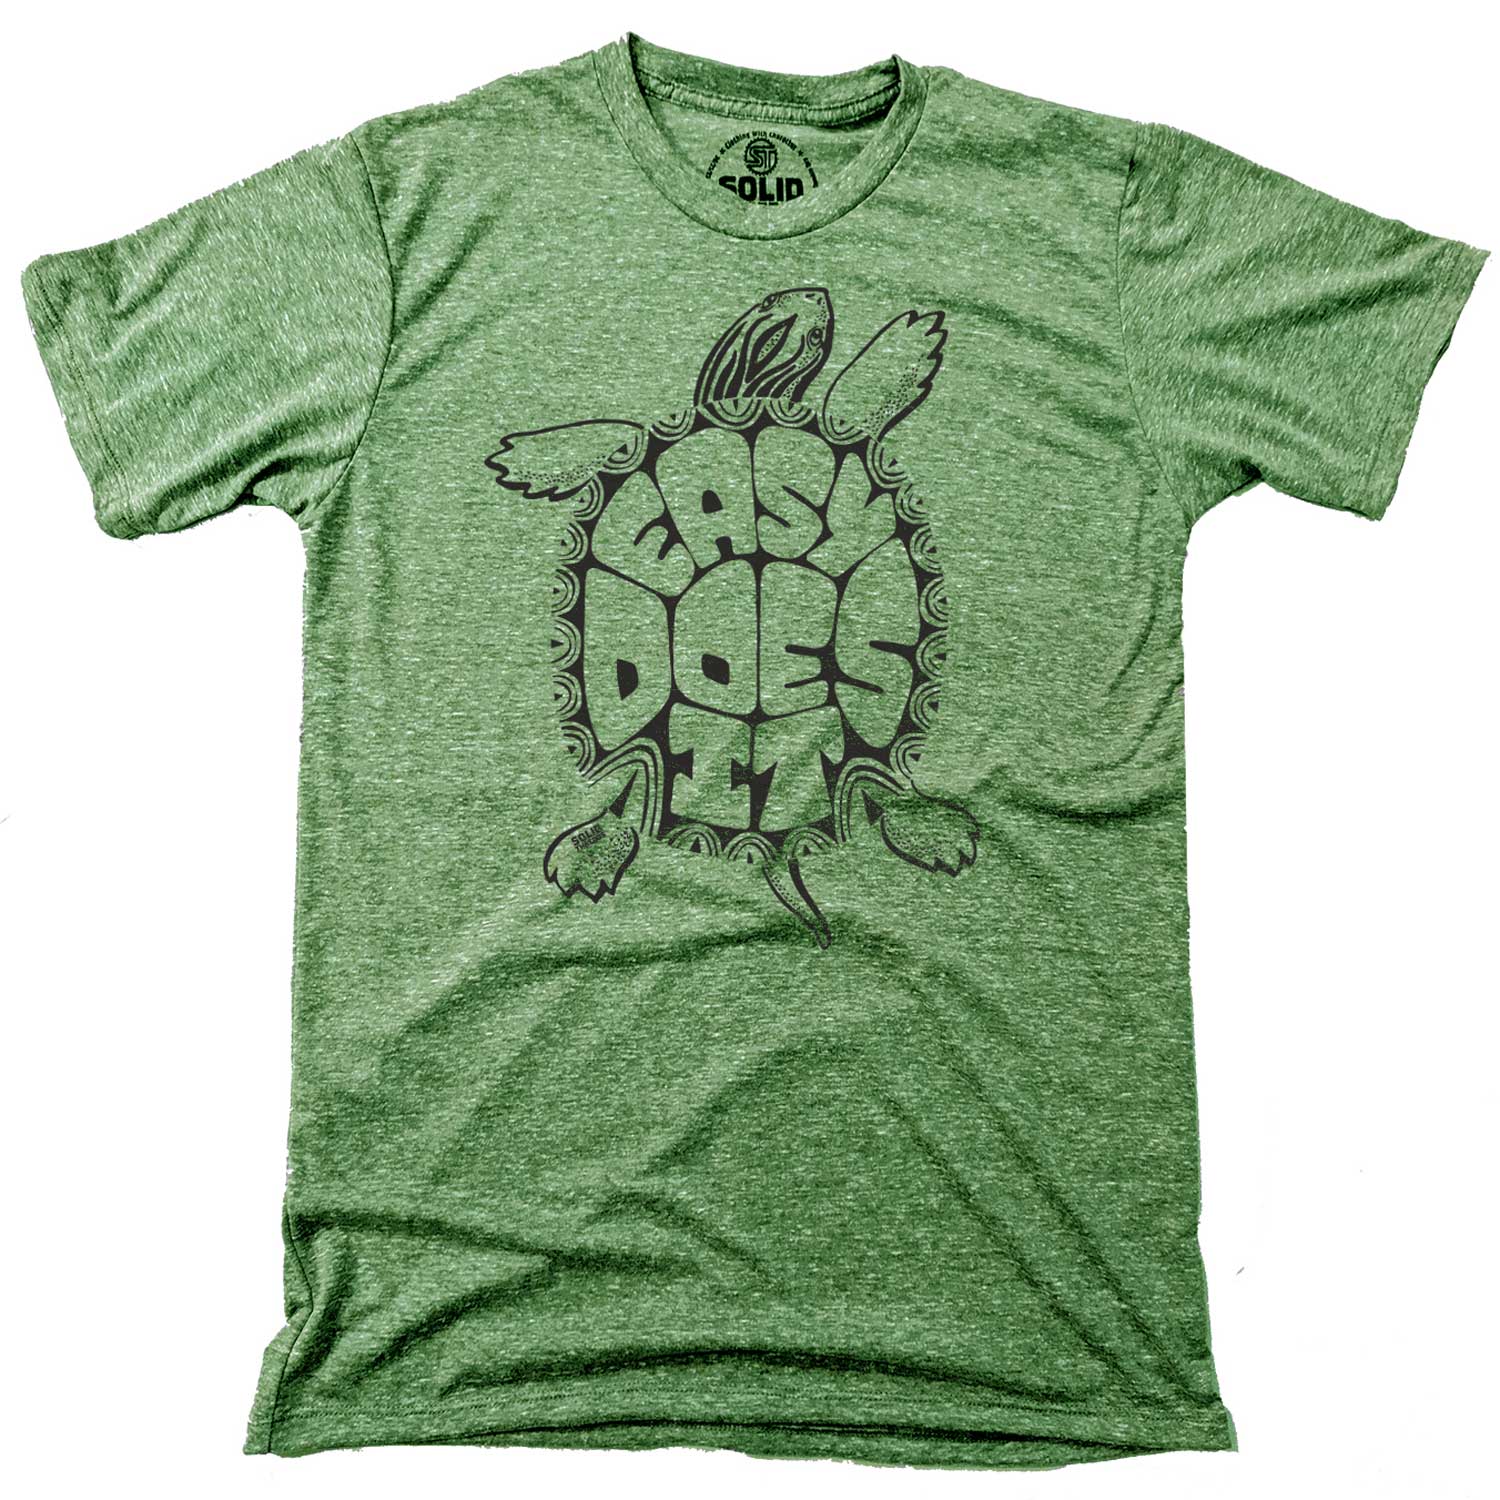 Turtles Make Me Happy Funny Turtle T-Shirt